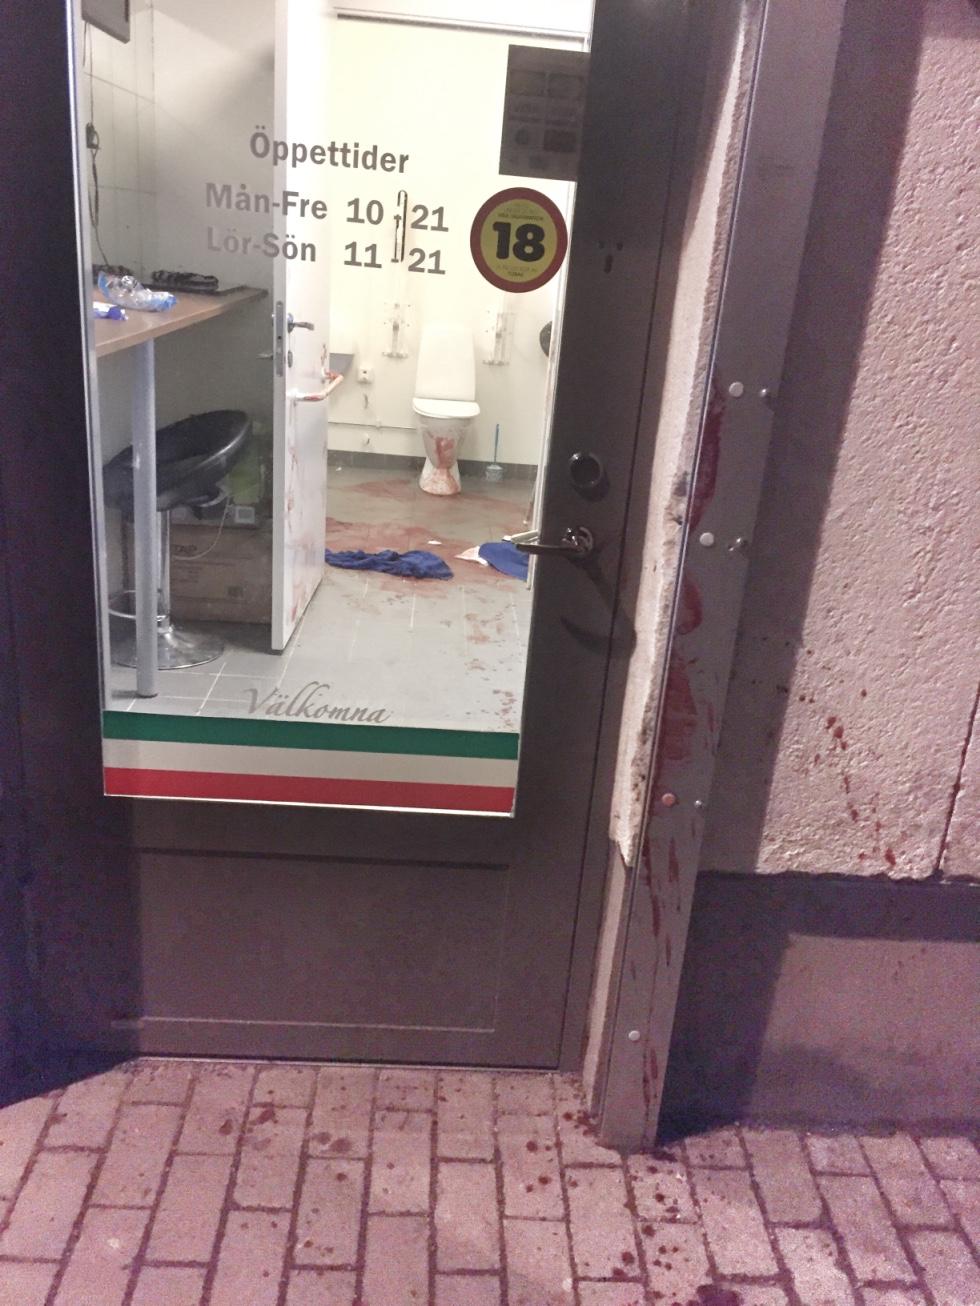 En skjuten man sökte skydd inne på en pizzeria i Fagersjö i Stockholm.